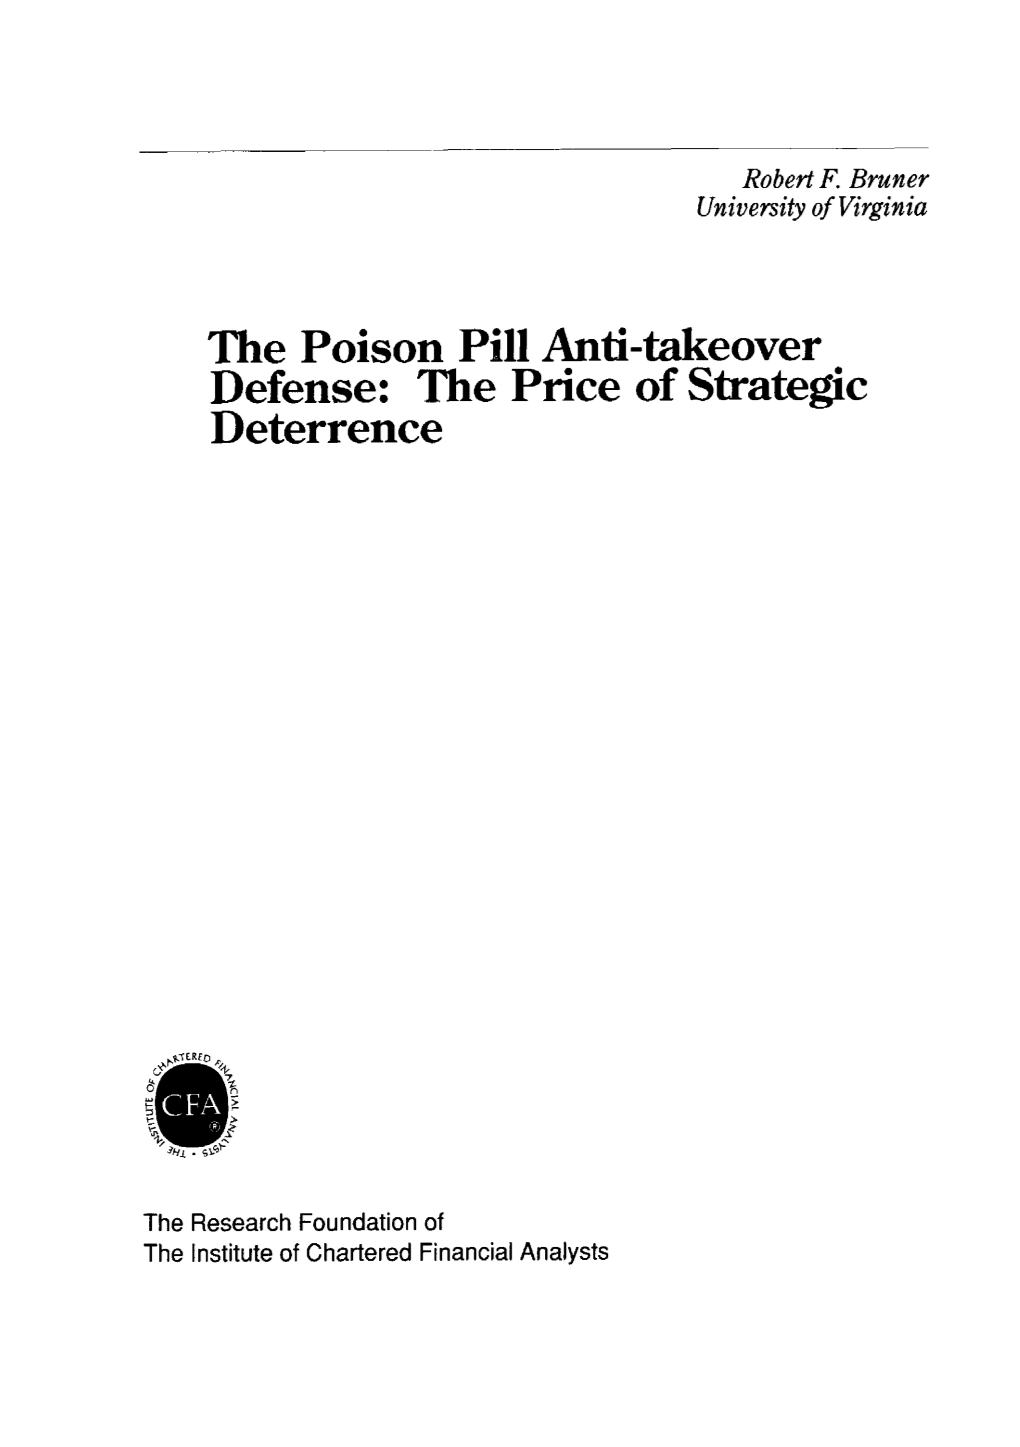 The Poison Pill Anti-Takeover Defense: the Price of Strategic Deterrence the Poison Pill Anti-Takeover Defense